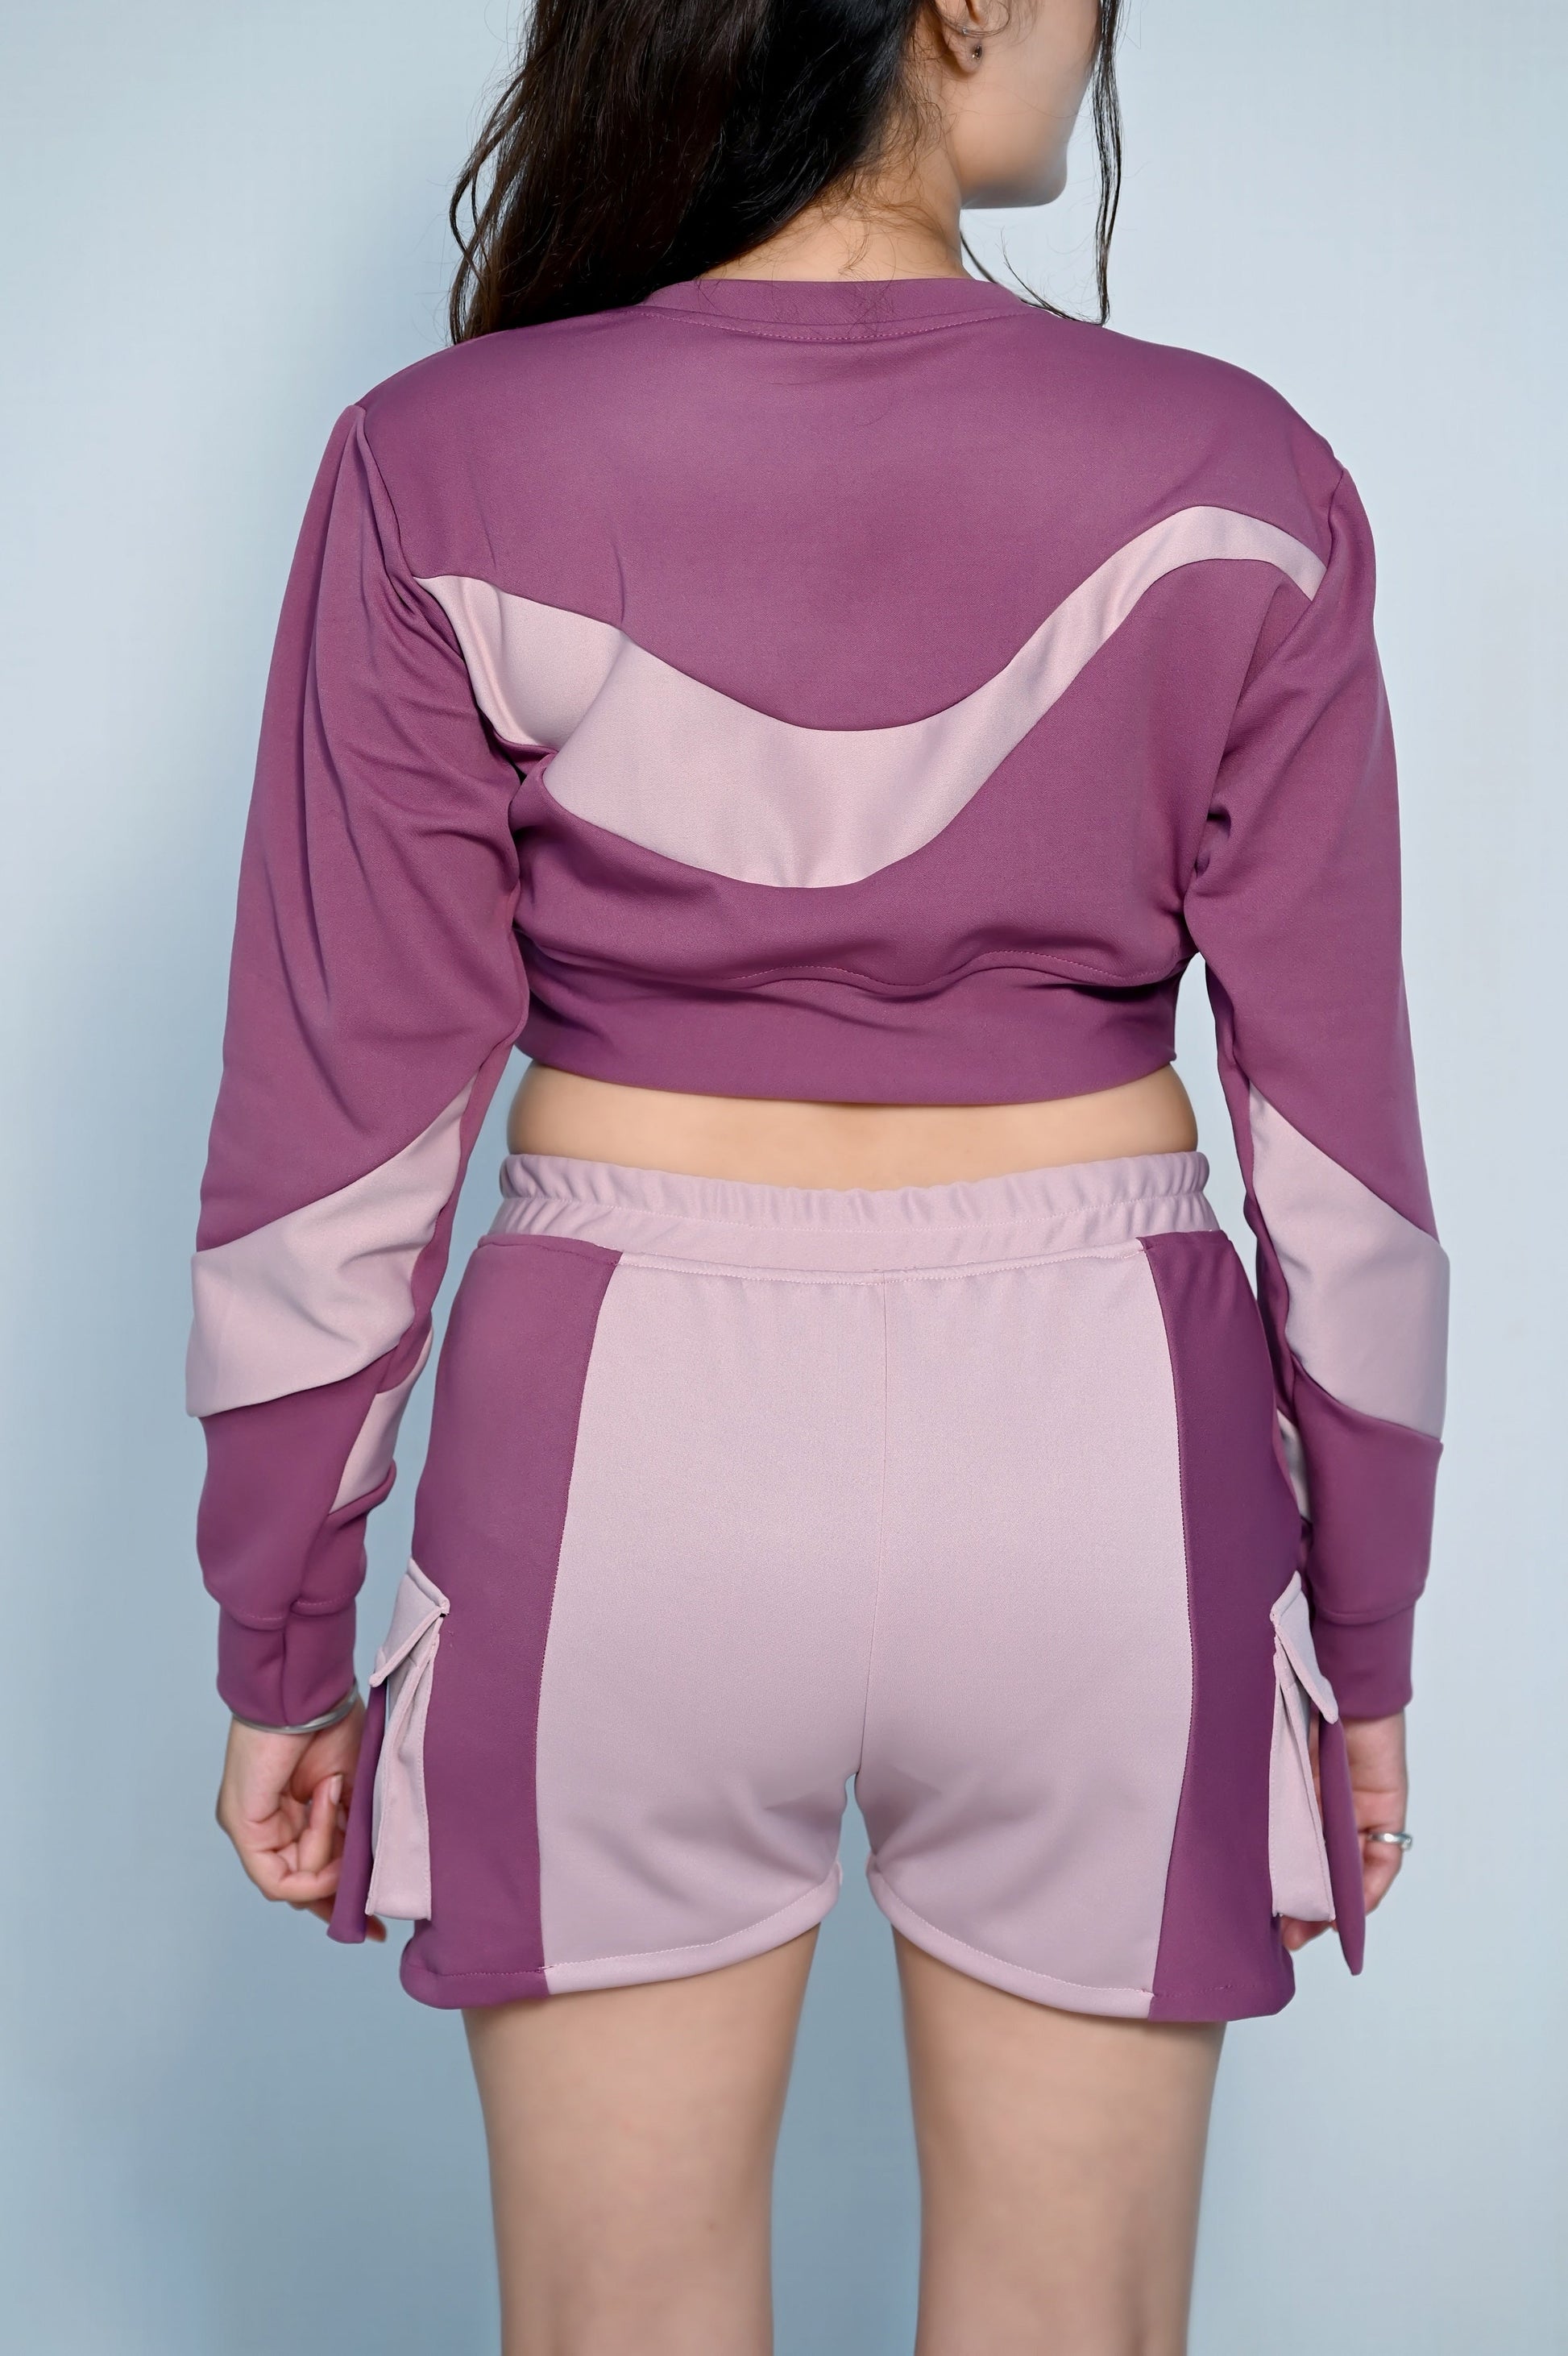 Vibrant Vision in Color Blocks - Full Sleeve Top & Shorts Set | GlamzLife